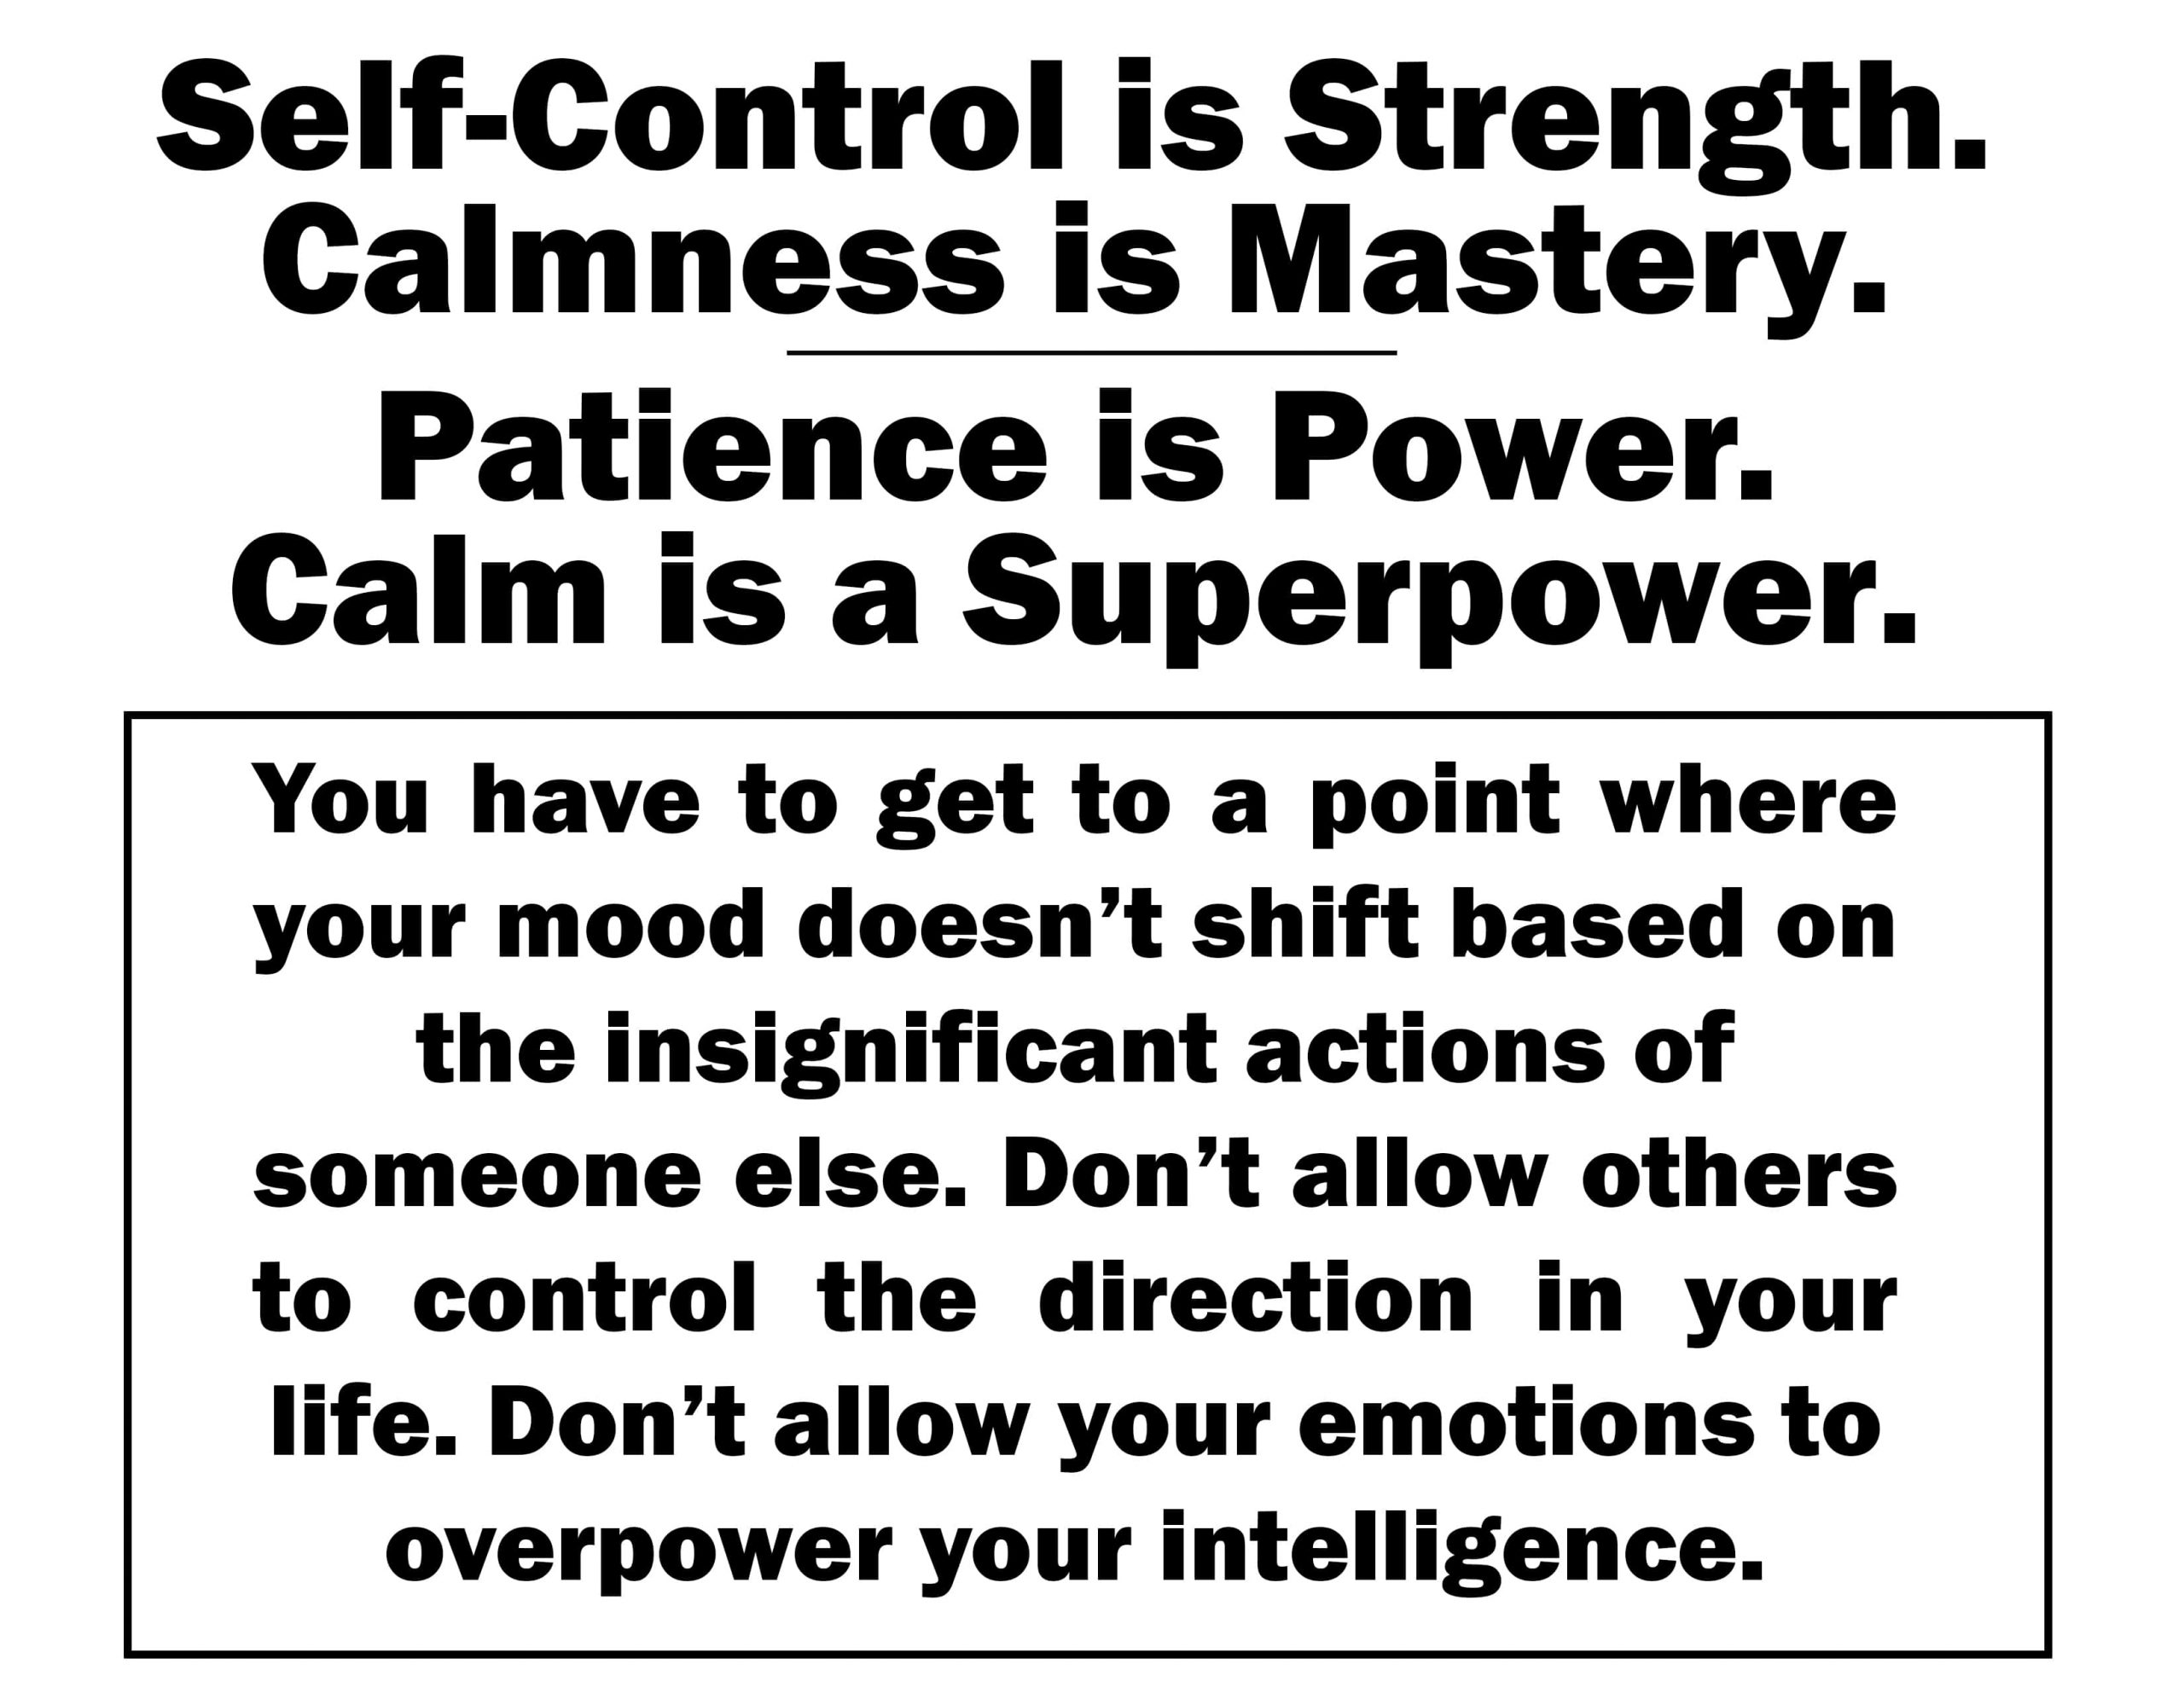 Calm is a Superpower